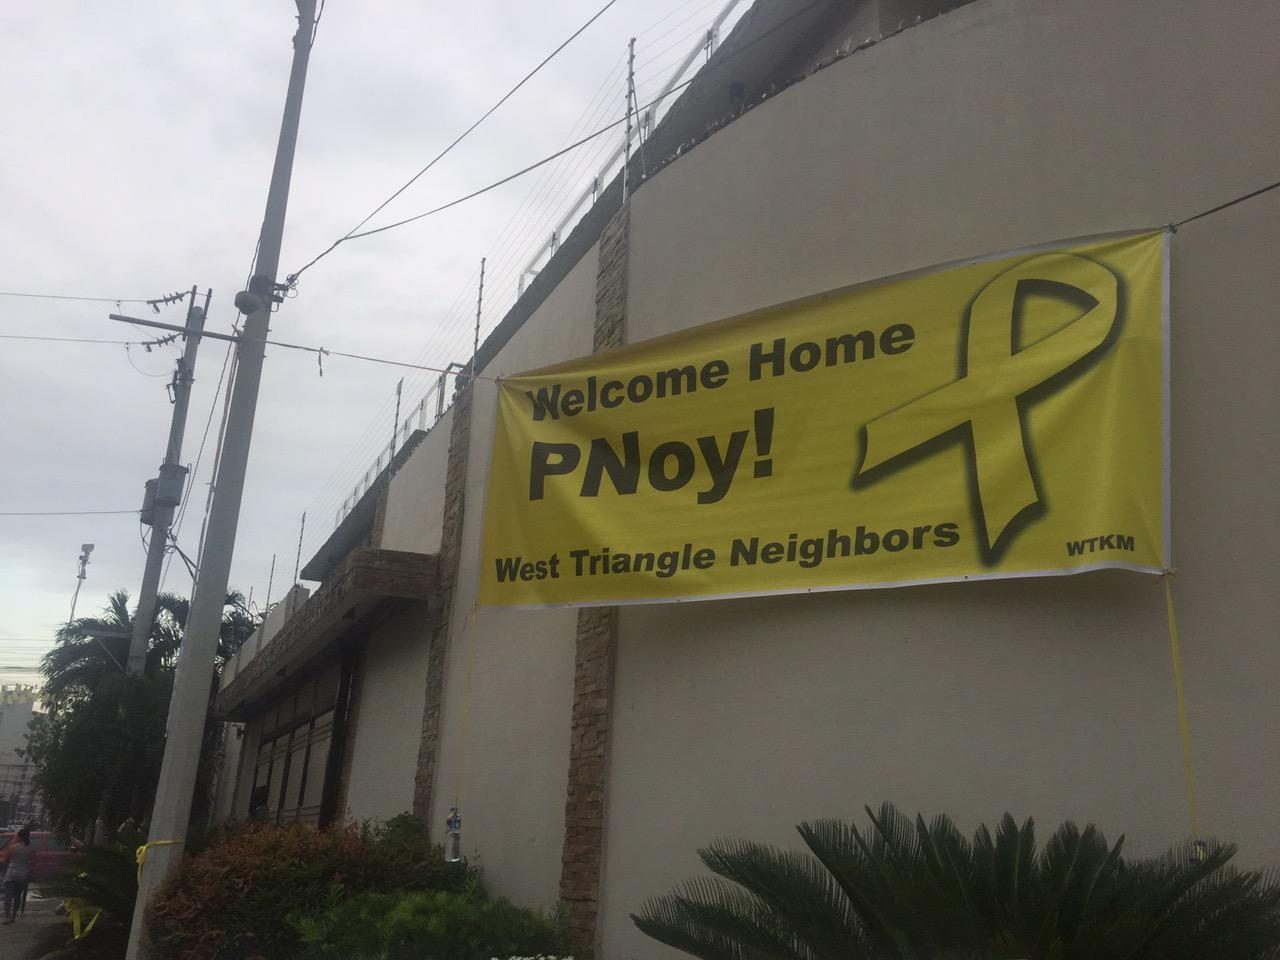 IN PHOTOS: QC neighbors welcome Aquino back